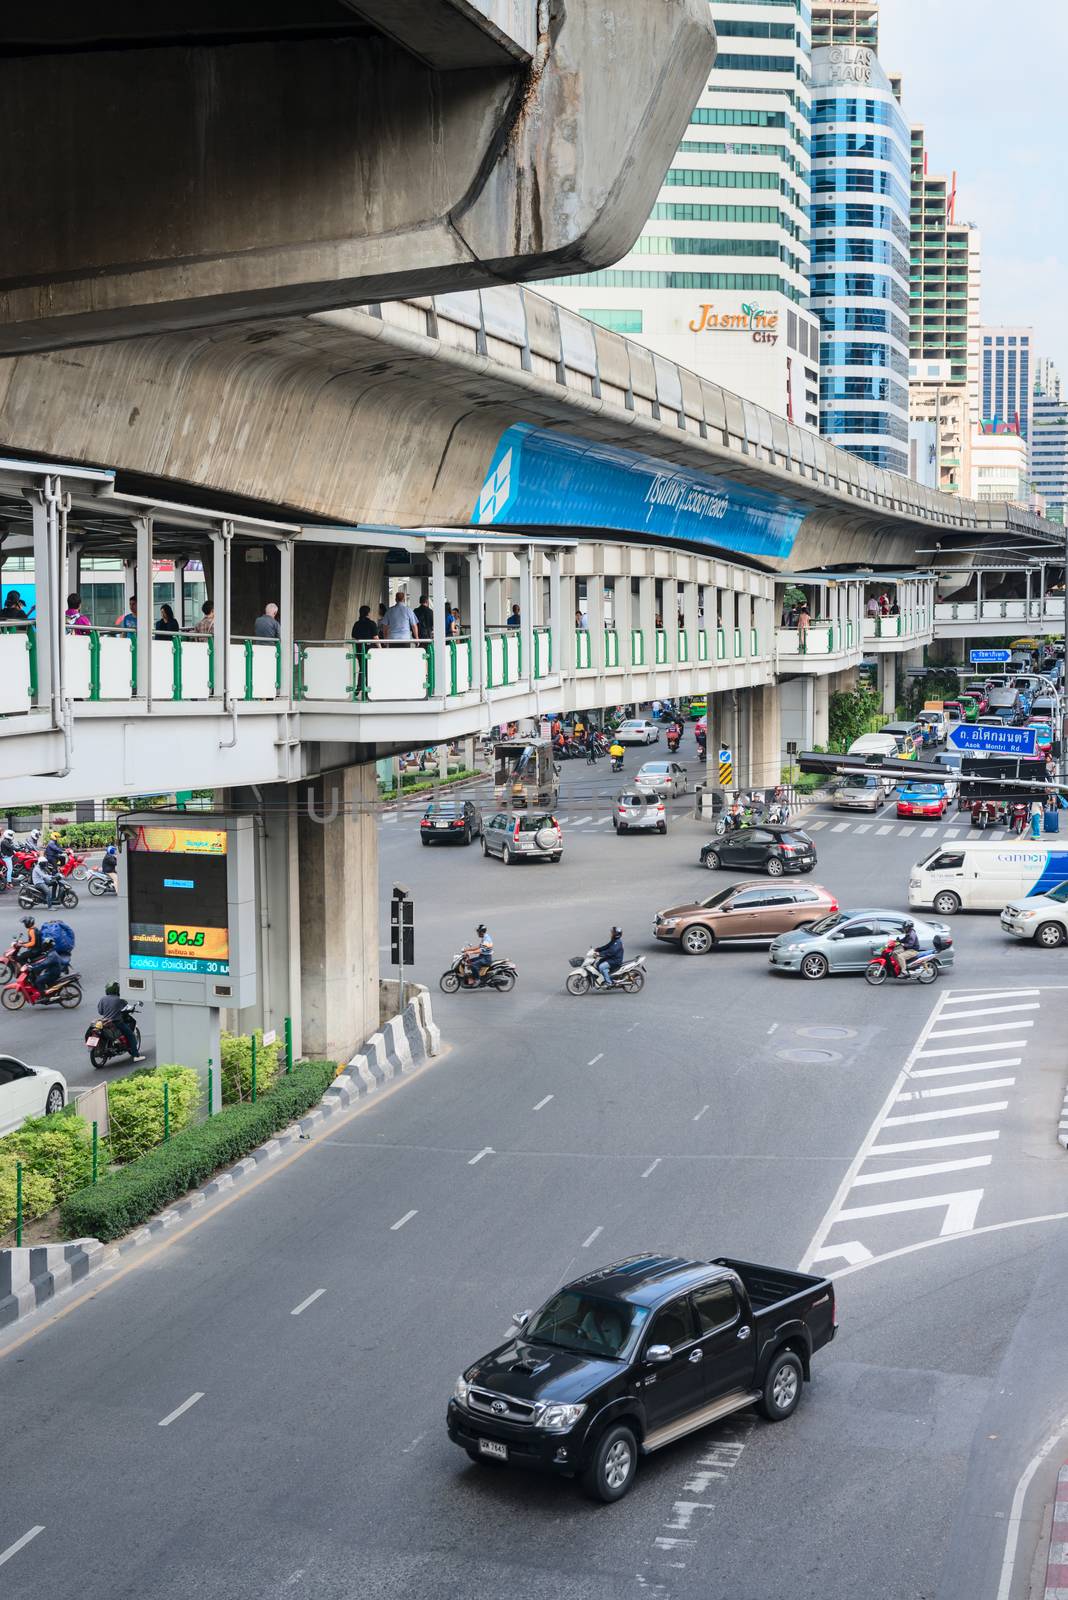 Multilevel Bangkok with traffic on street, pedestrian and SkyTra by iryna_rasko